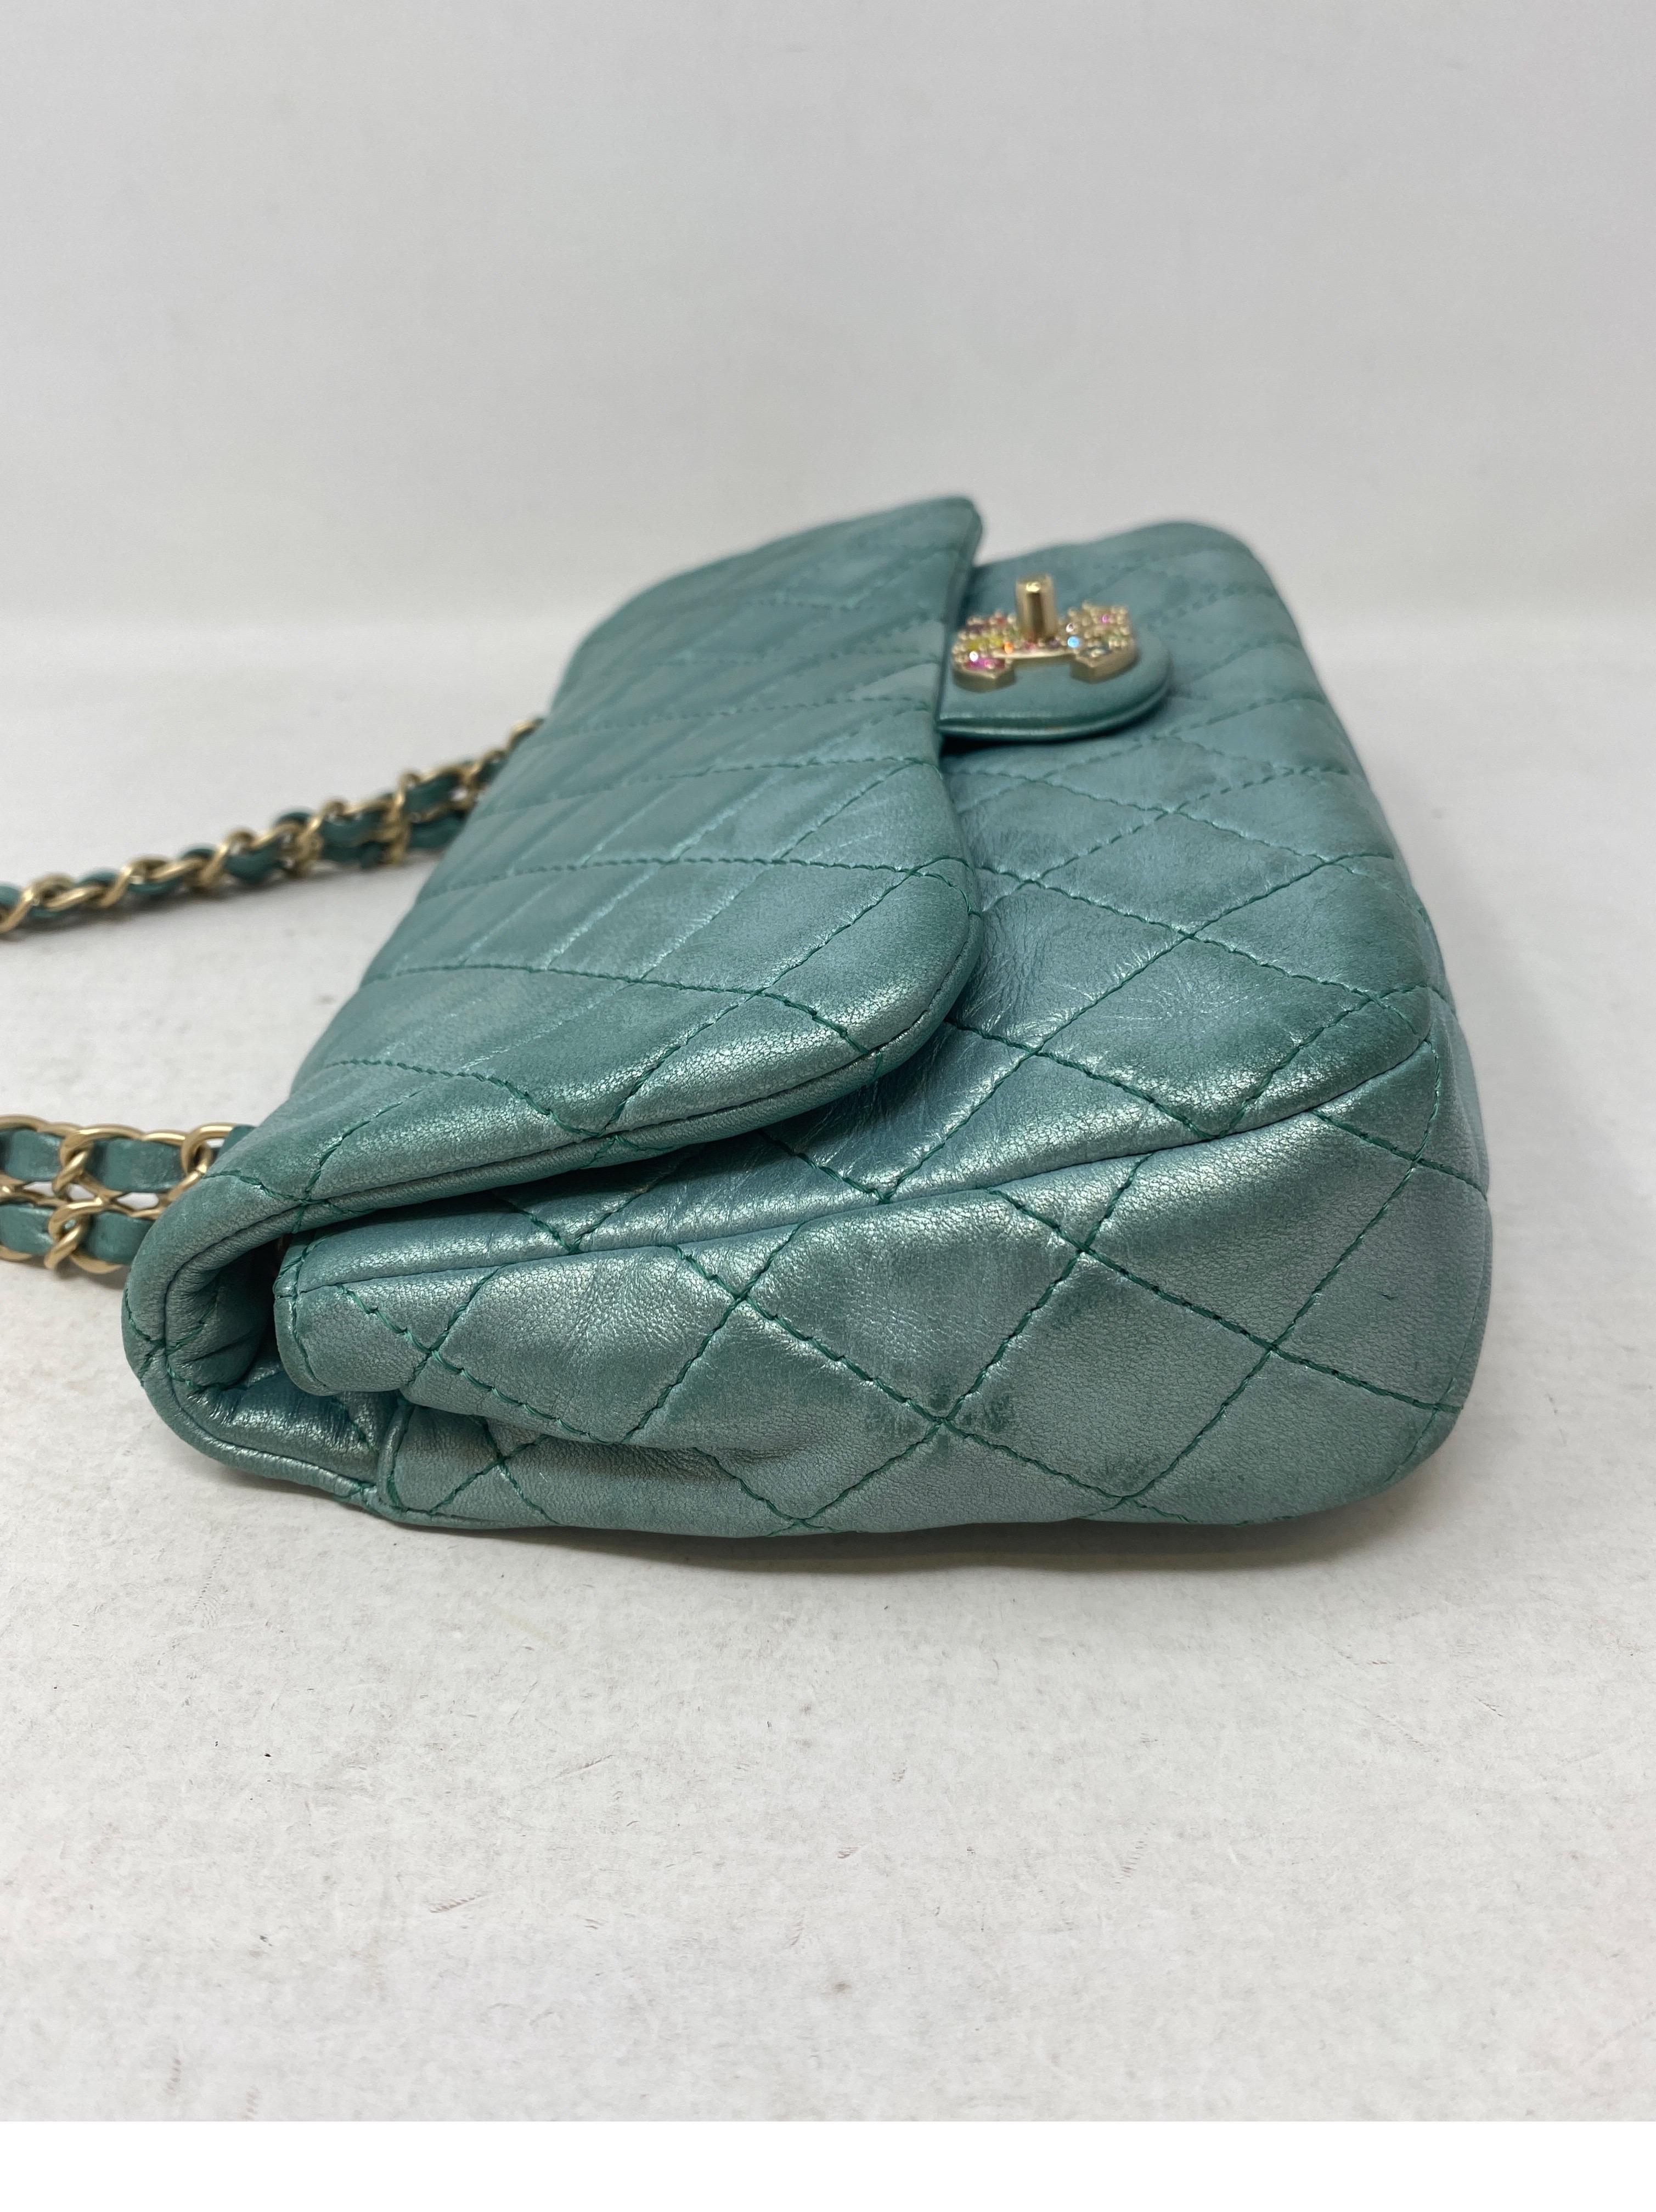 Chanel Teal Jeweled Bag  2